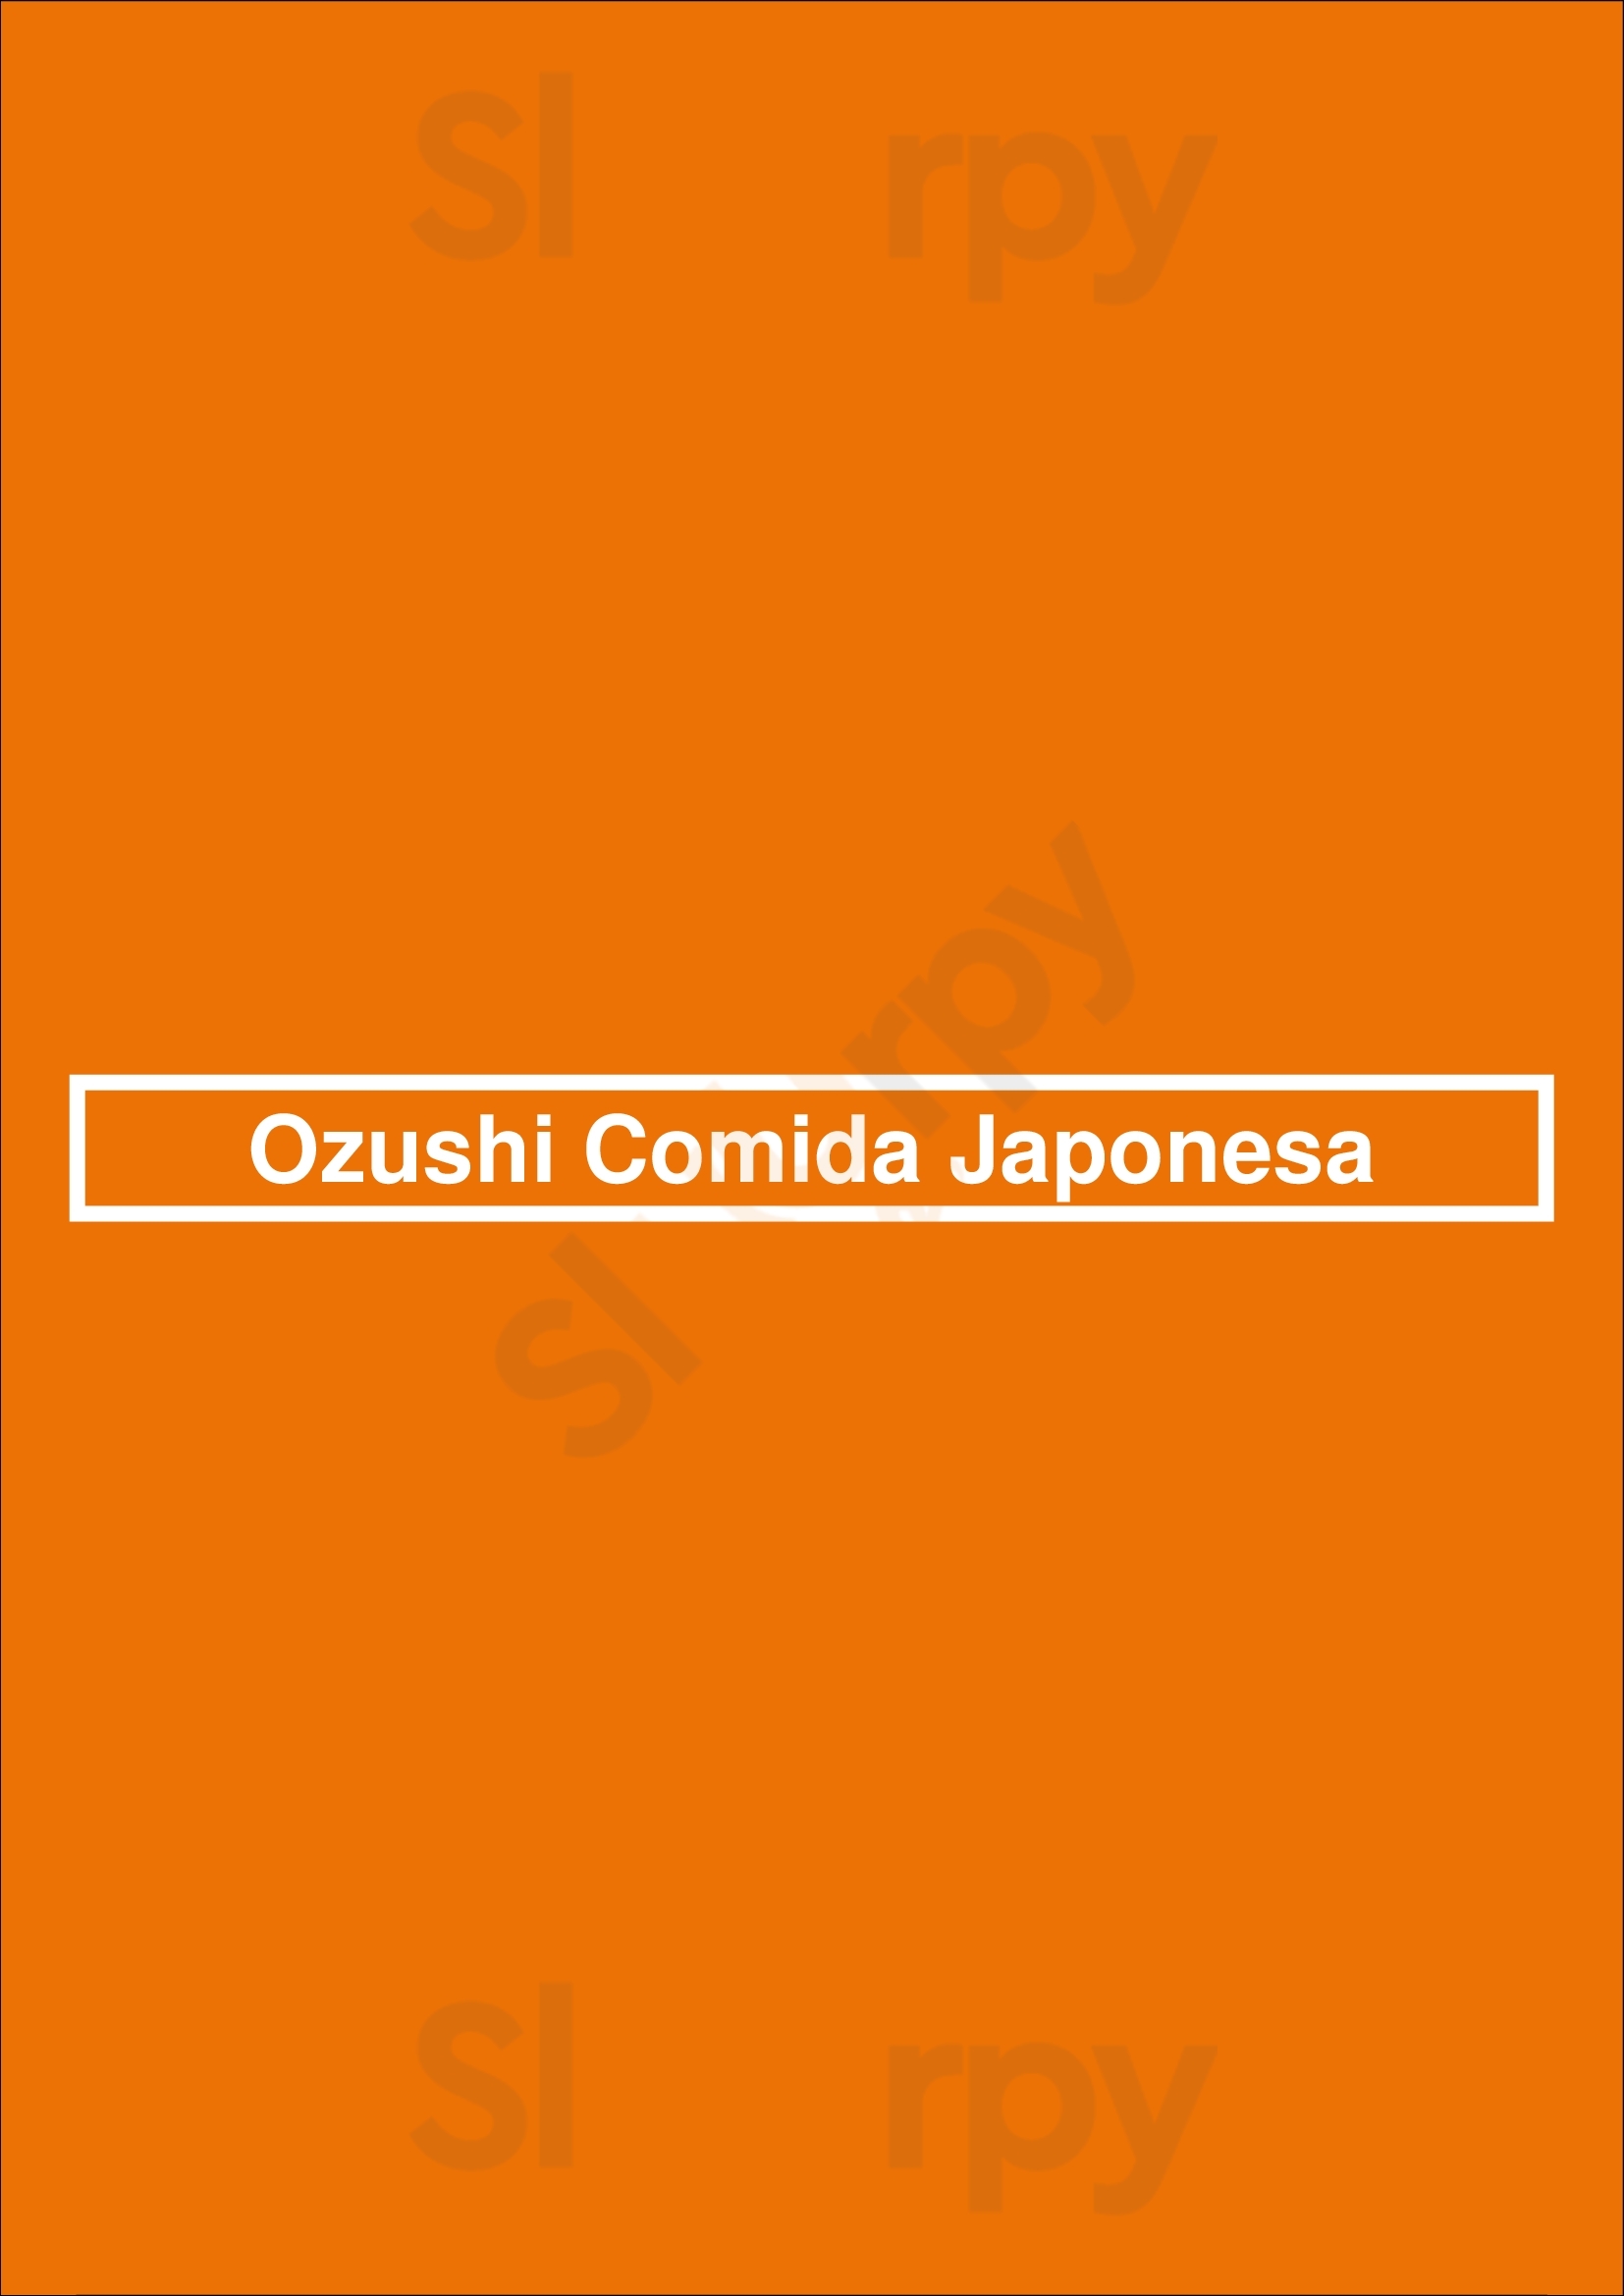 Ozushi Comida Japonesa São Paulo Menu - 1